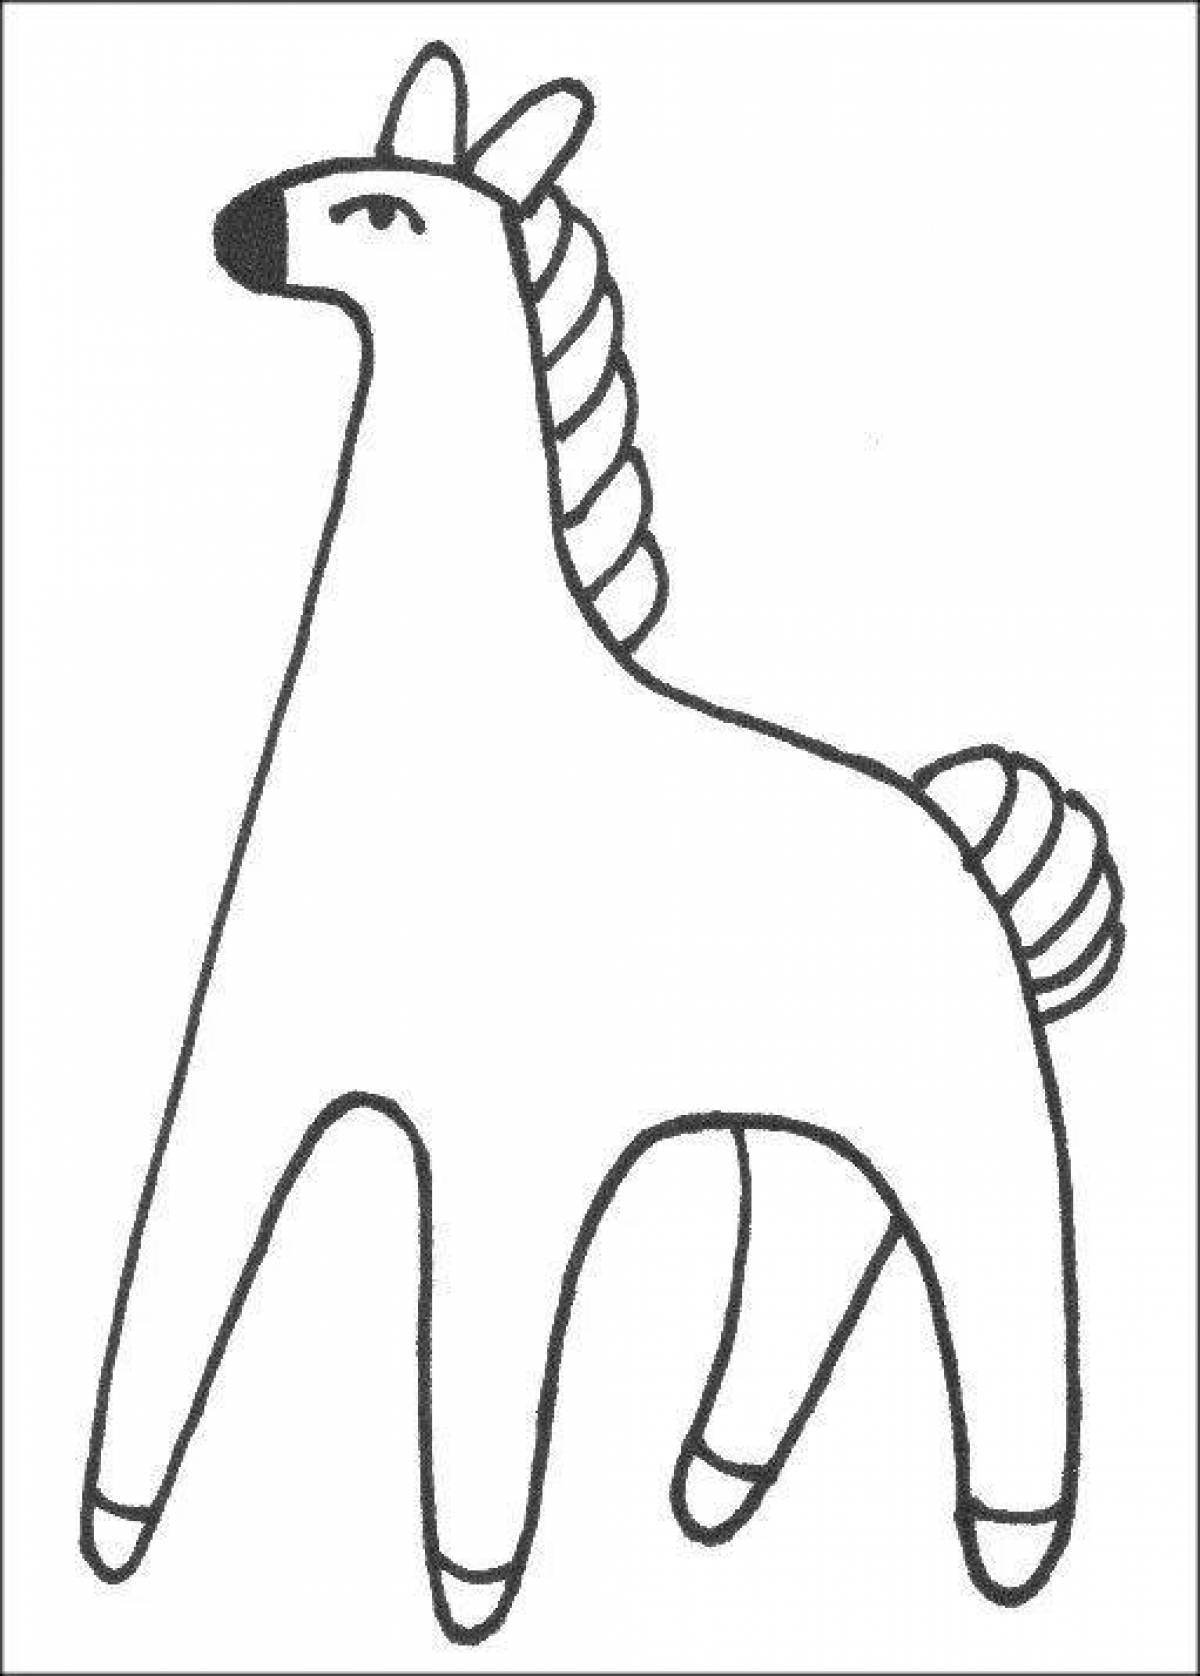 Bright Dymkovo horse coloring book for children